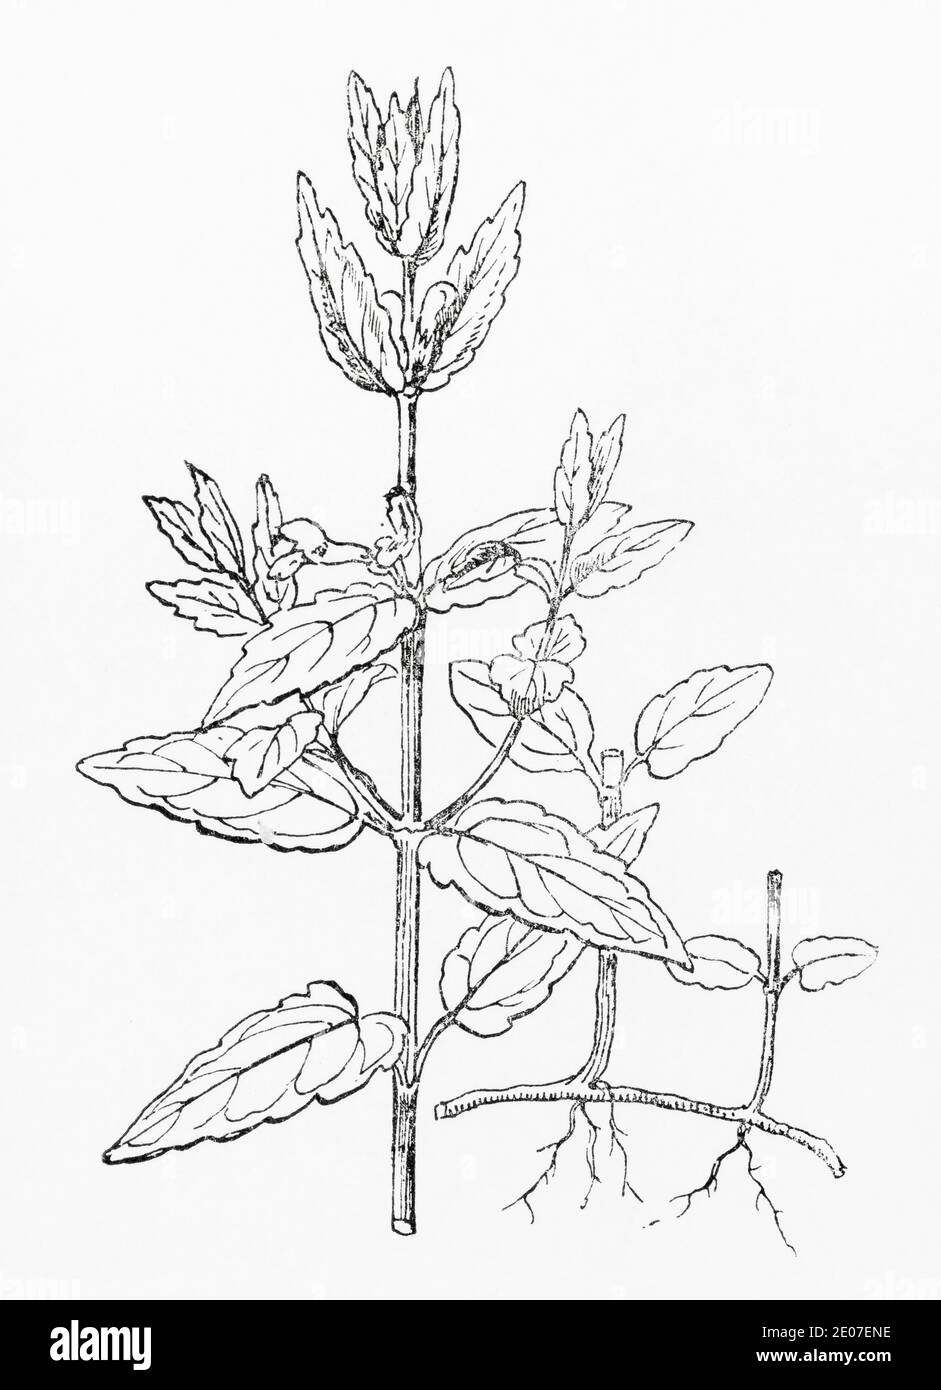 Old botanical illustration engraving of Greater Skullcap, Common Skullcap / Scutellaria galericulata. Traditional medicinal herbal plant. See Notes Stock Photo